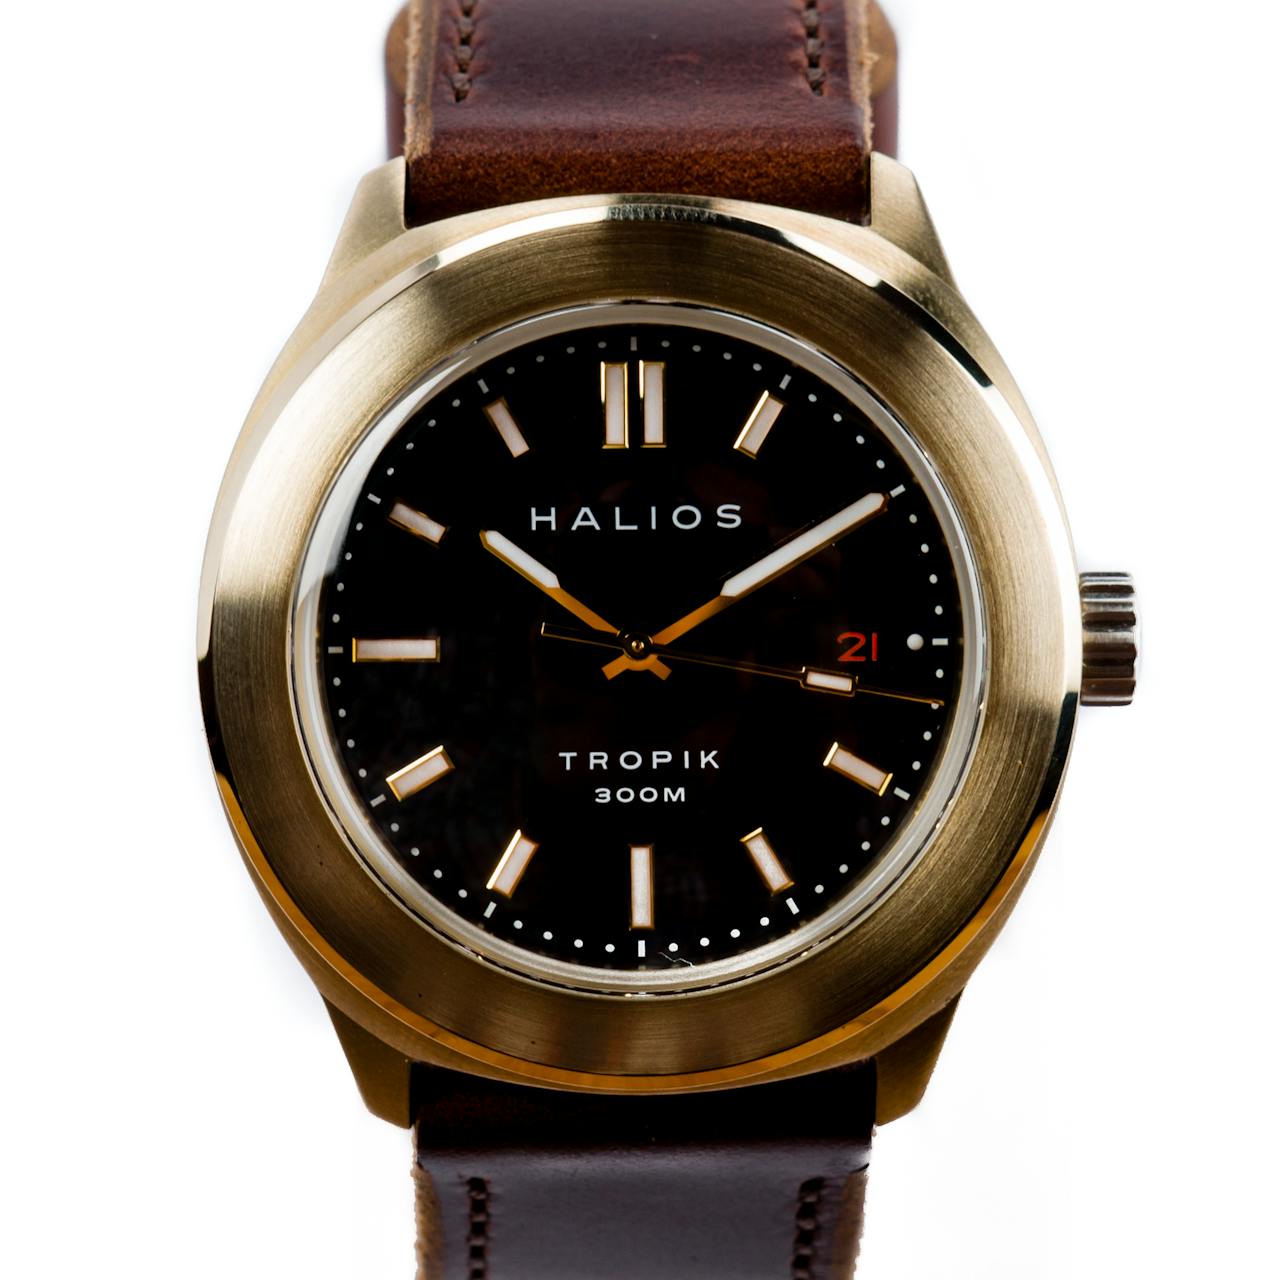 Halios Tropik Bronze Watch - Baton Dial